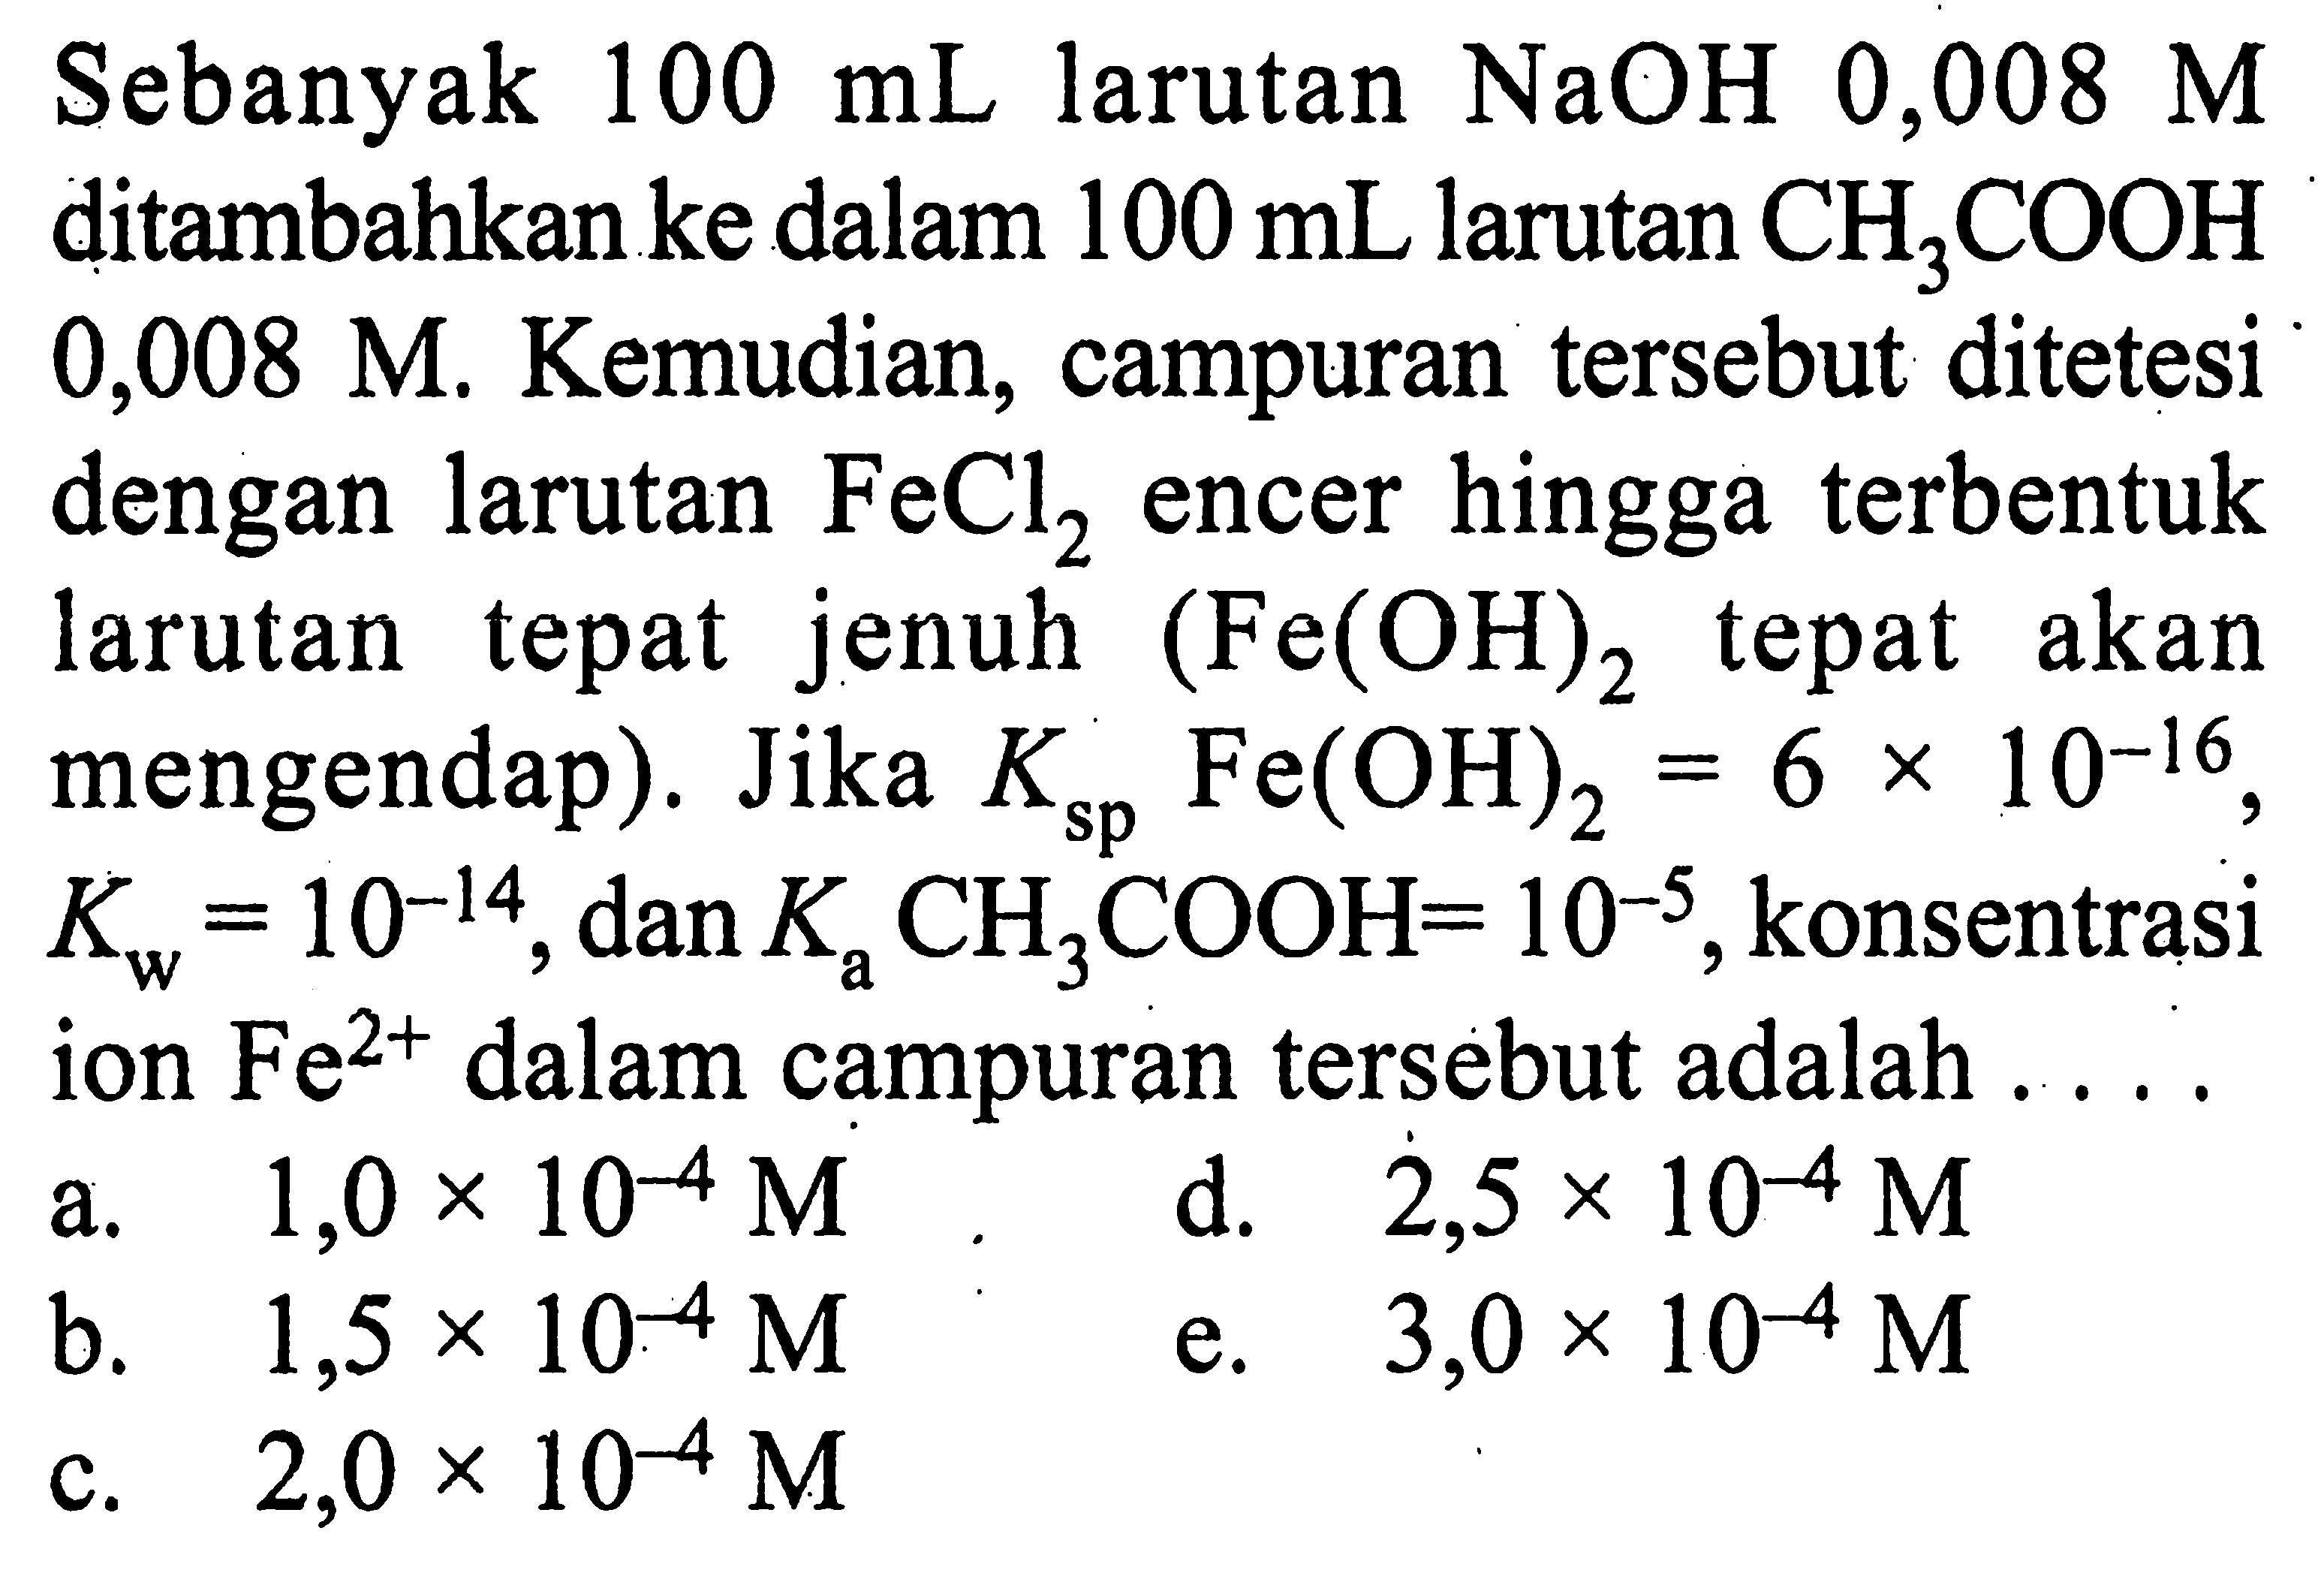 Sebanyak  100 mL  larutan  NaOH  0,008 M  ditambahkan ke dalam  100 mL  larutan  CH3 COOH   0,008 M . Kemudian, campuran tersebut ditetesi dengan larutan  FeCl2  encer hingga terbentuk larutan tepat jenuh  (Fe(OH)2.  tepat akan mengendap). Jika  K sp  Fe(OH)2=6 x 10^-16 ,  Kw=10^-14 , dan  Ka CH3 COOH=10^-5 , konsentrasi ion  Fe^2+  dalam campuran tersebut adalah ....